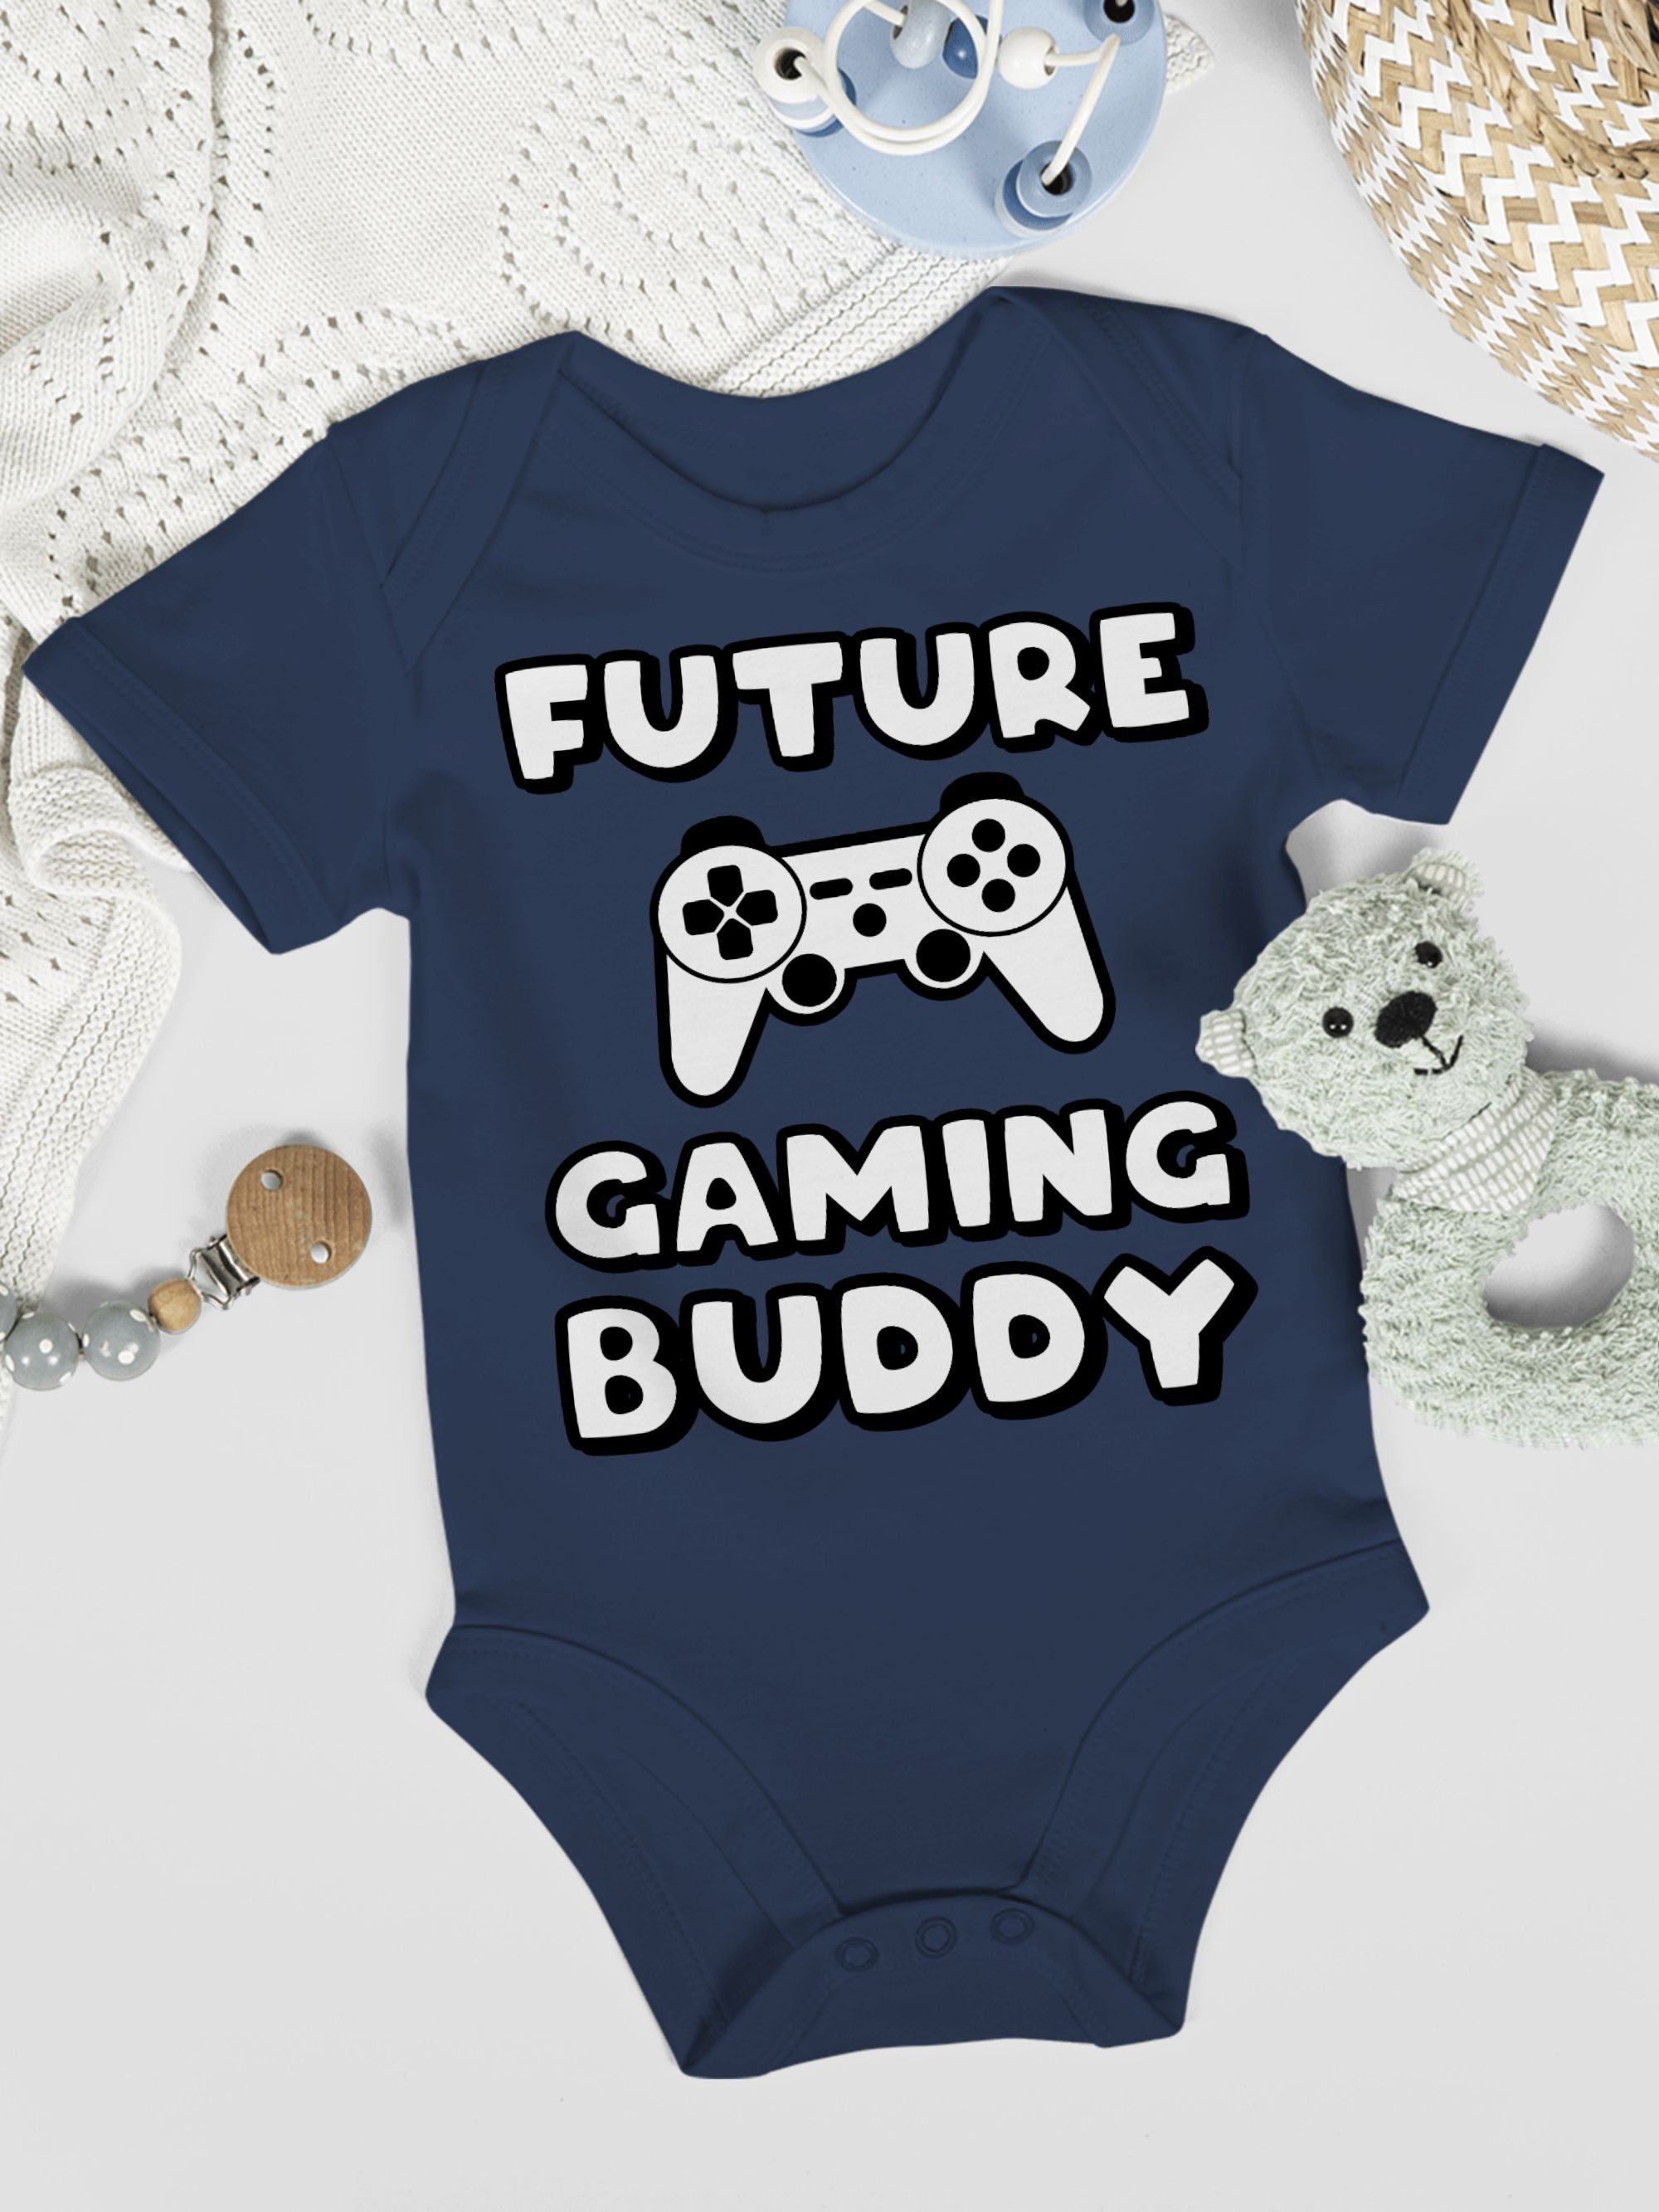 2 Blau Sprüche Shirtracer Baby Future Shirtbody Navy Buddy Gaming